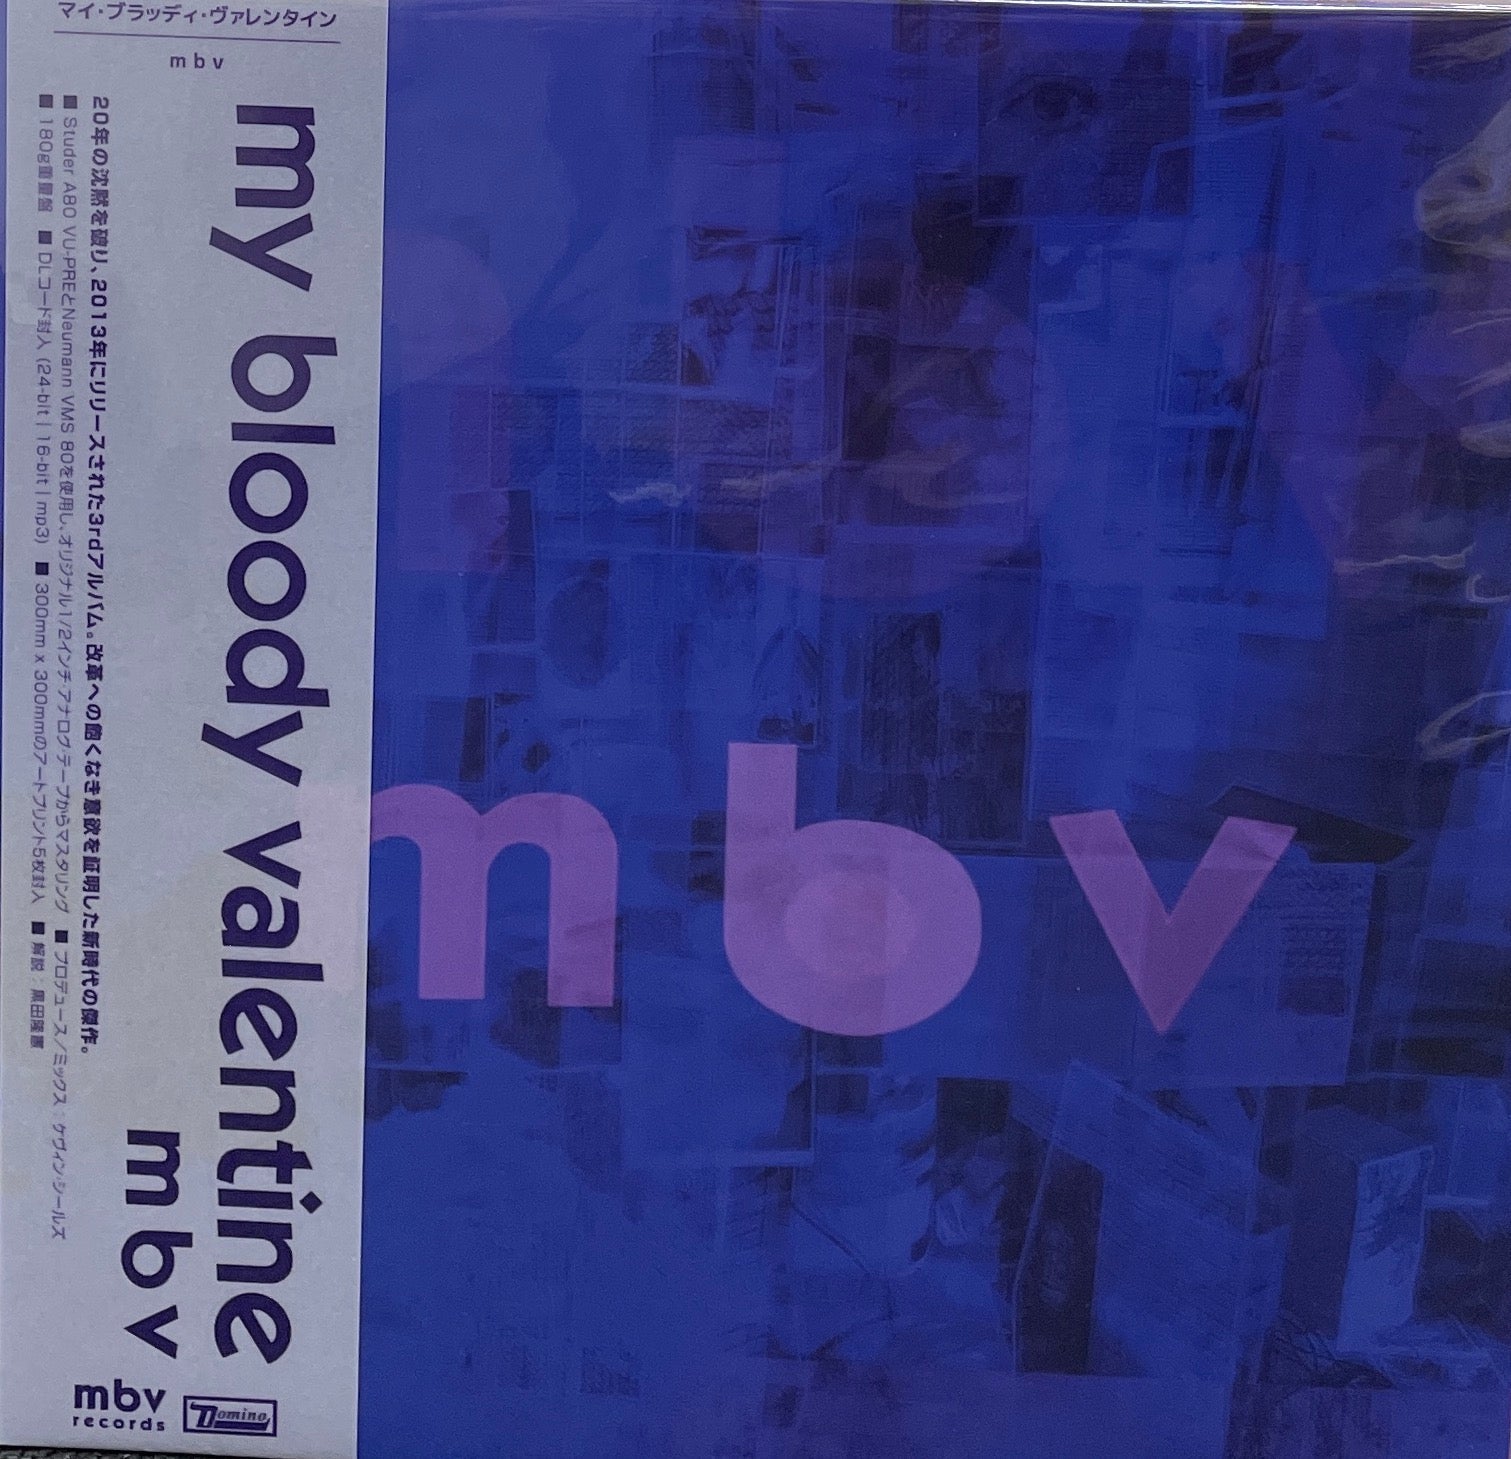 MY BLOODY VALENTINE / m b v (Deluxe Edition) REWIGLP160BR 帯付LP 